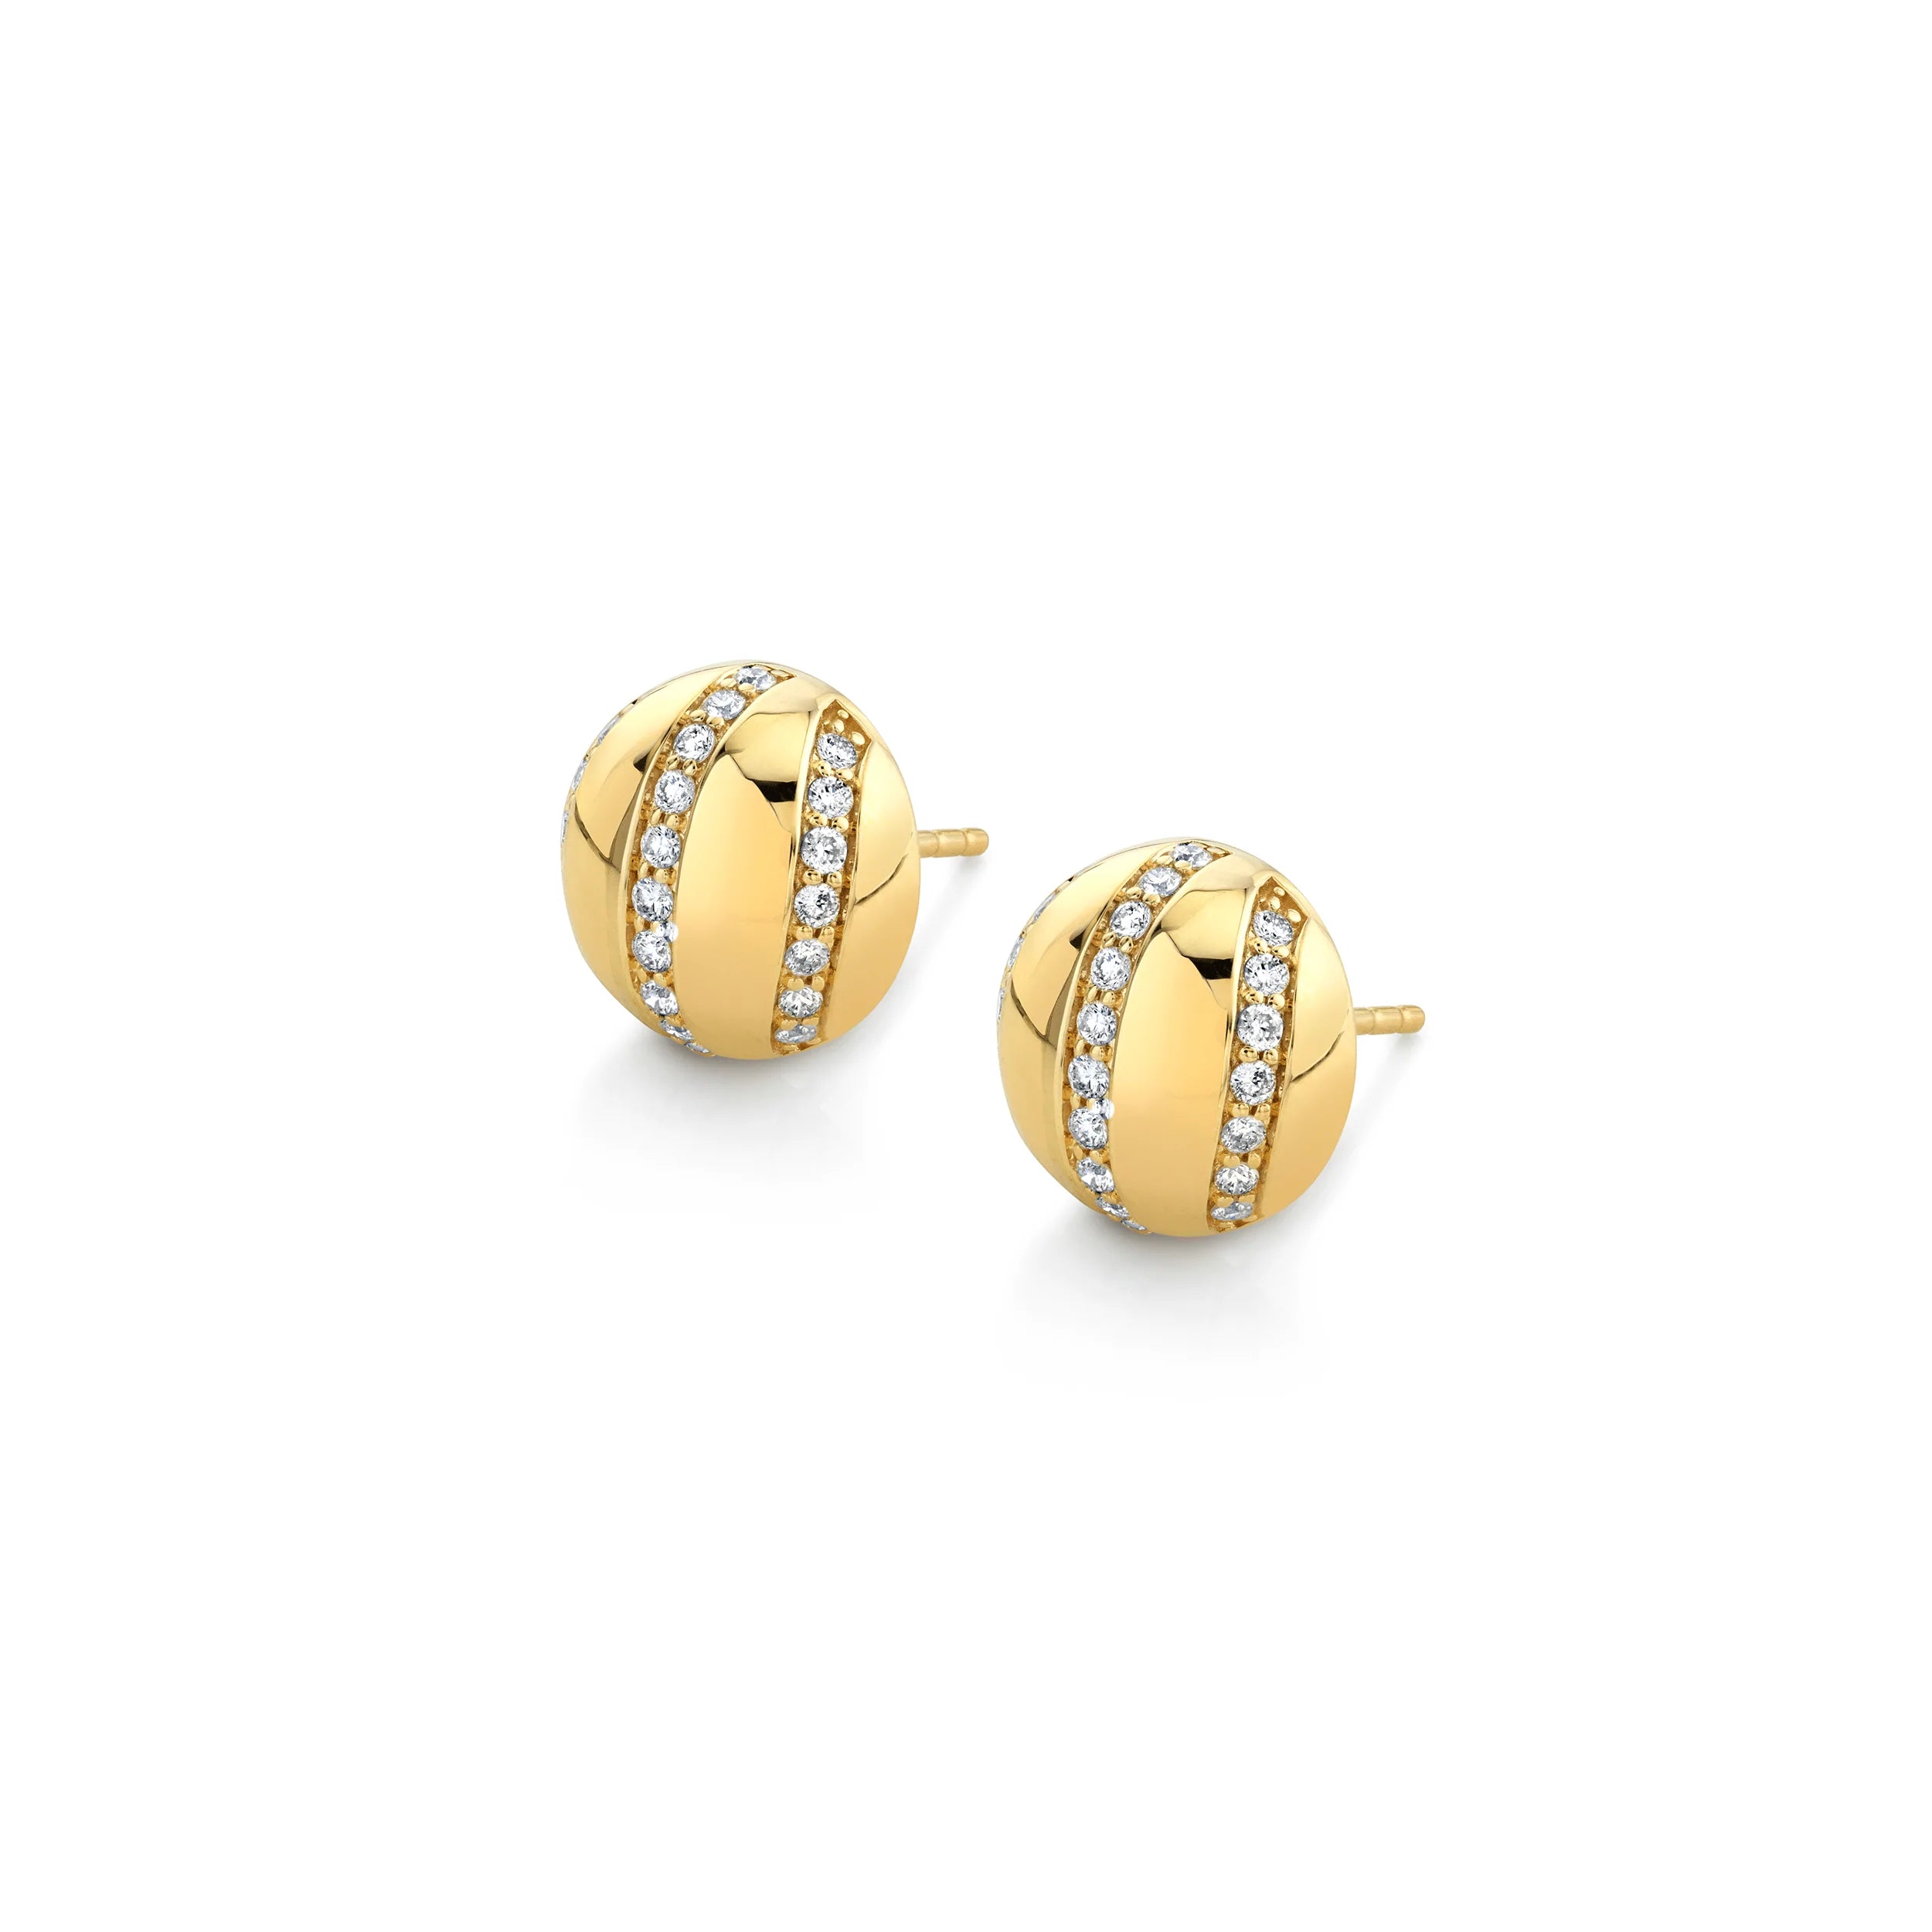 MICHAEL M Earrings 14K Yellow Gold Orb Stripe Button Studs ER531